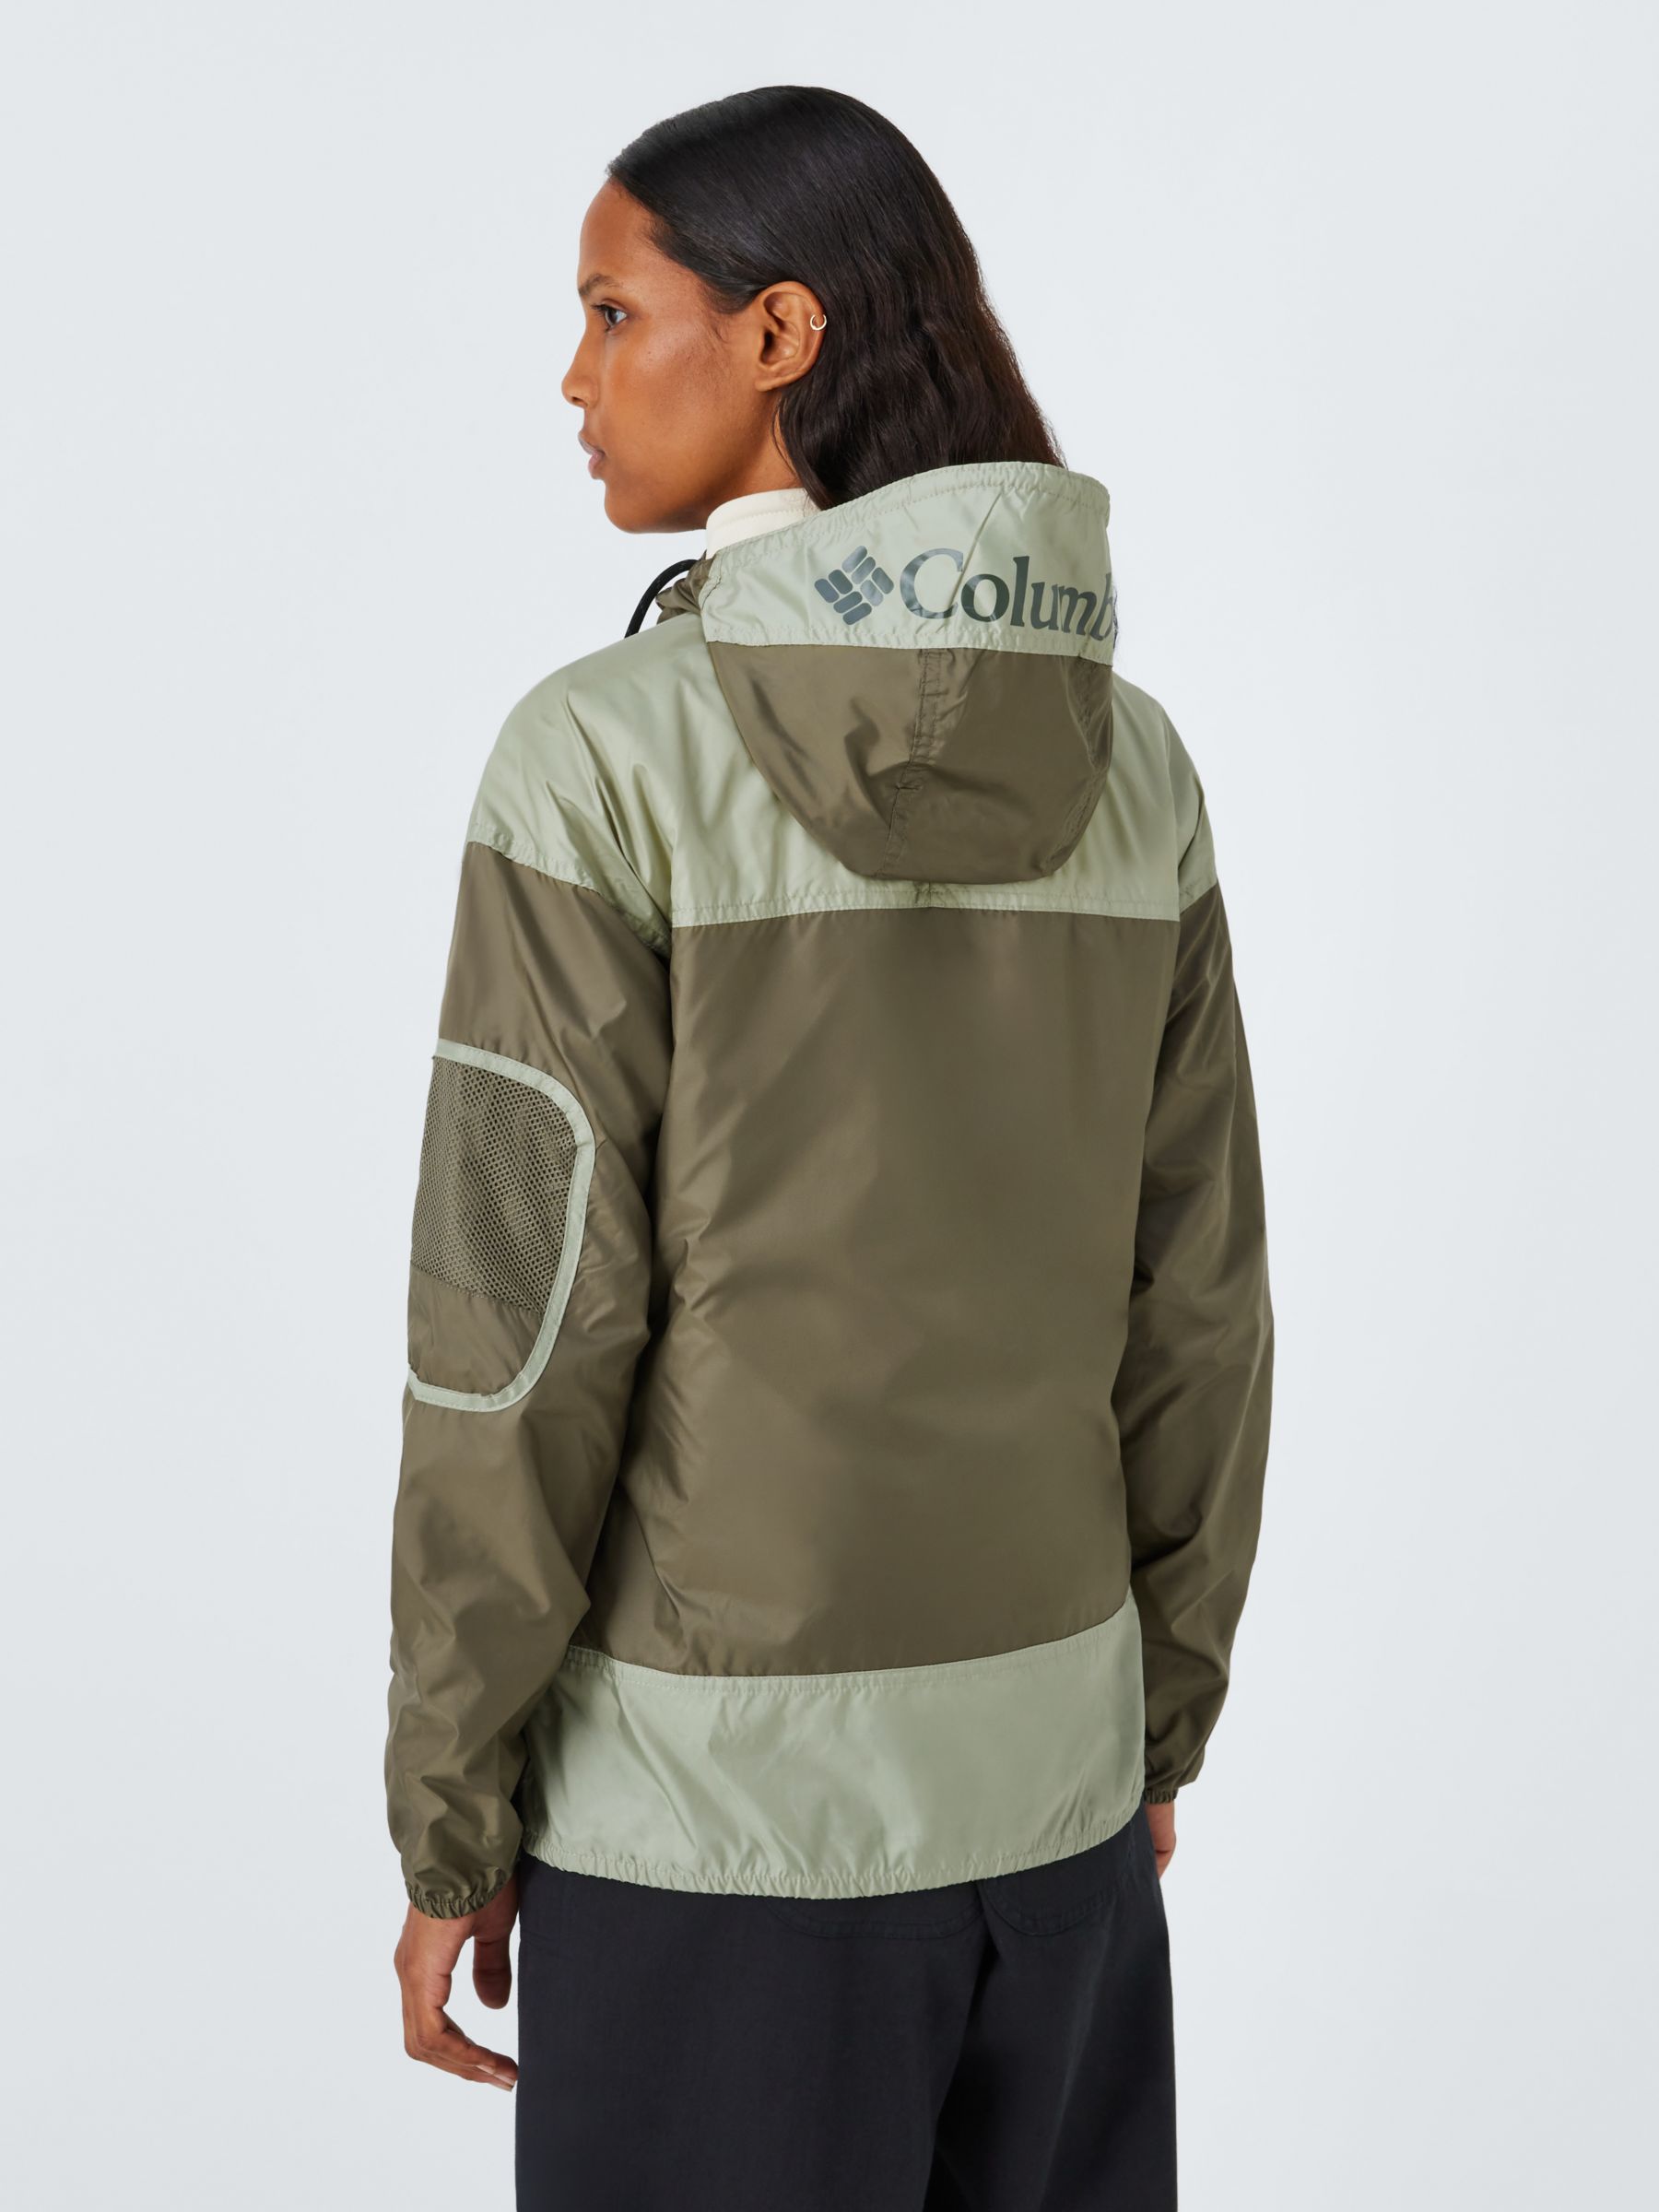 Columbia Women's Challenger Windbreaker Jacket, Stone Green, M